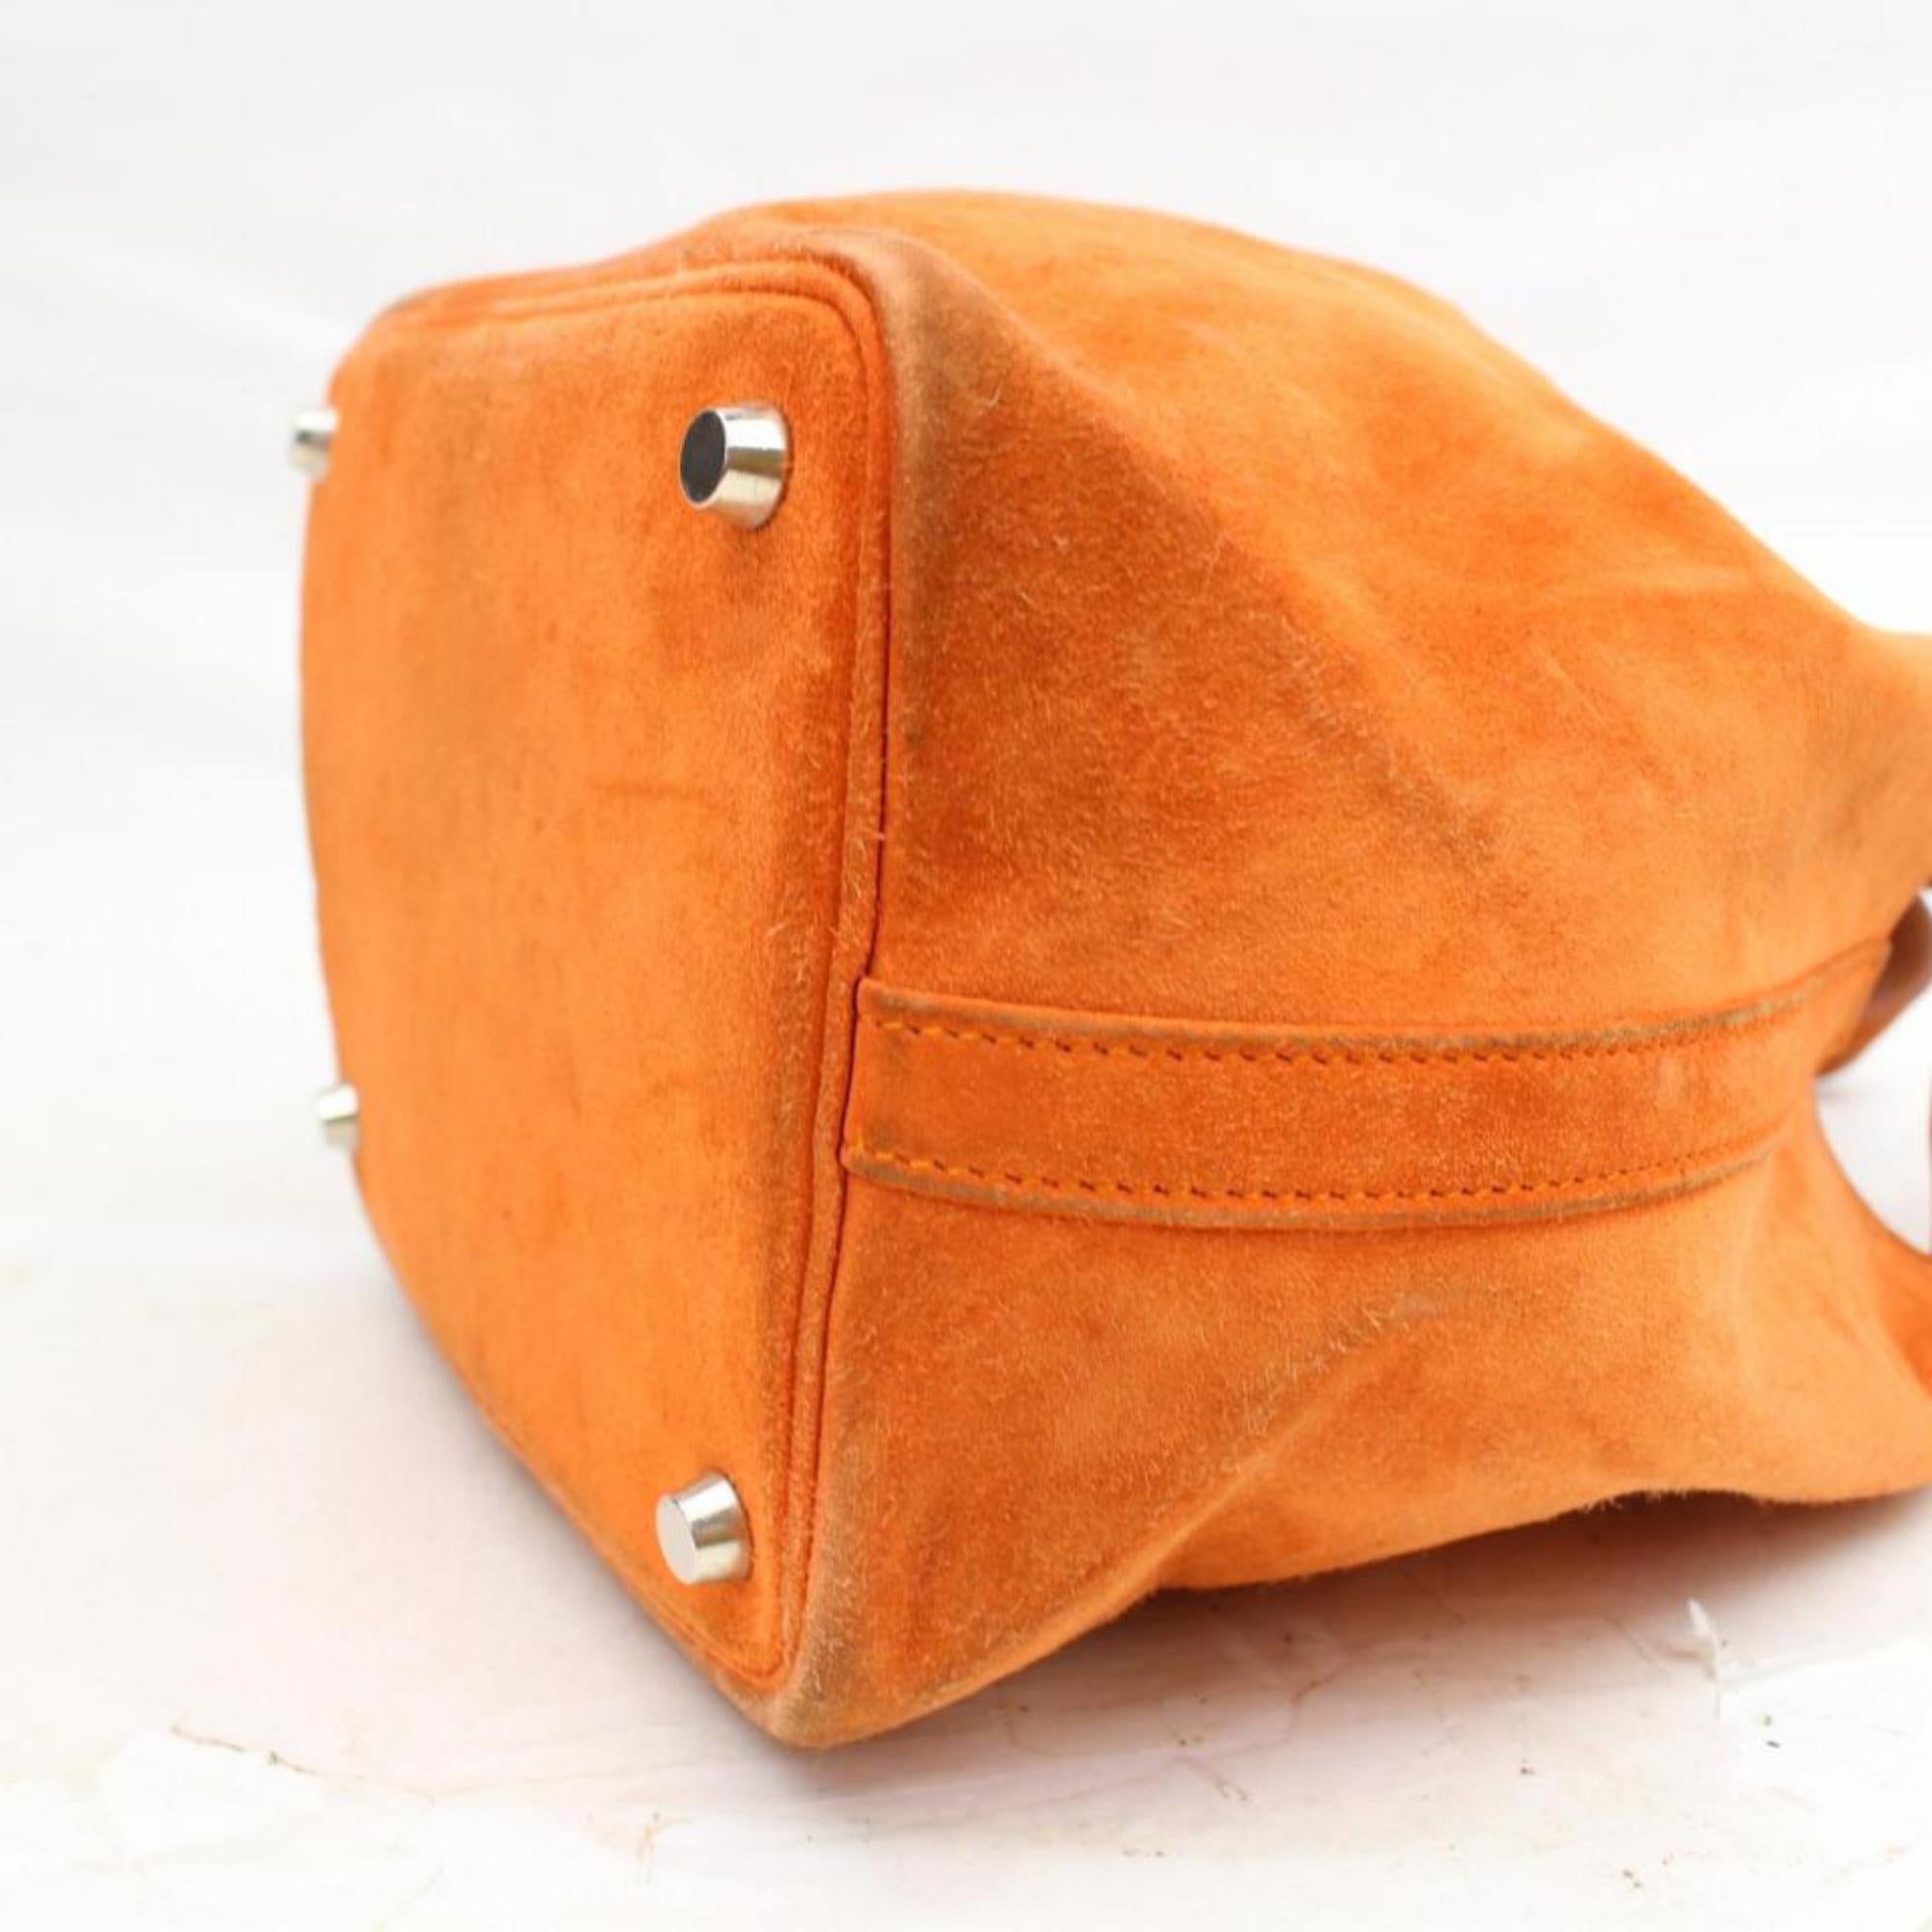 Hermès Picotin 18 Pm 868694 Orange Suede Leather Tote For Sale 7